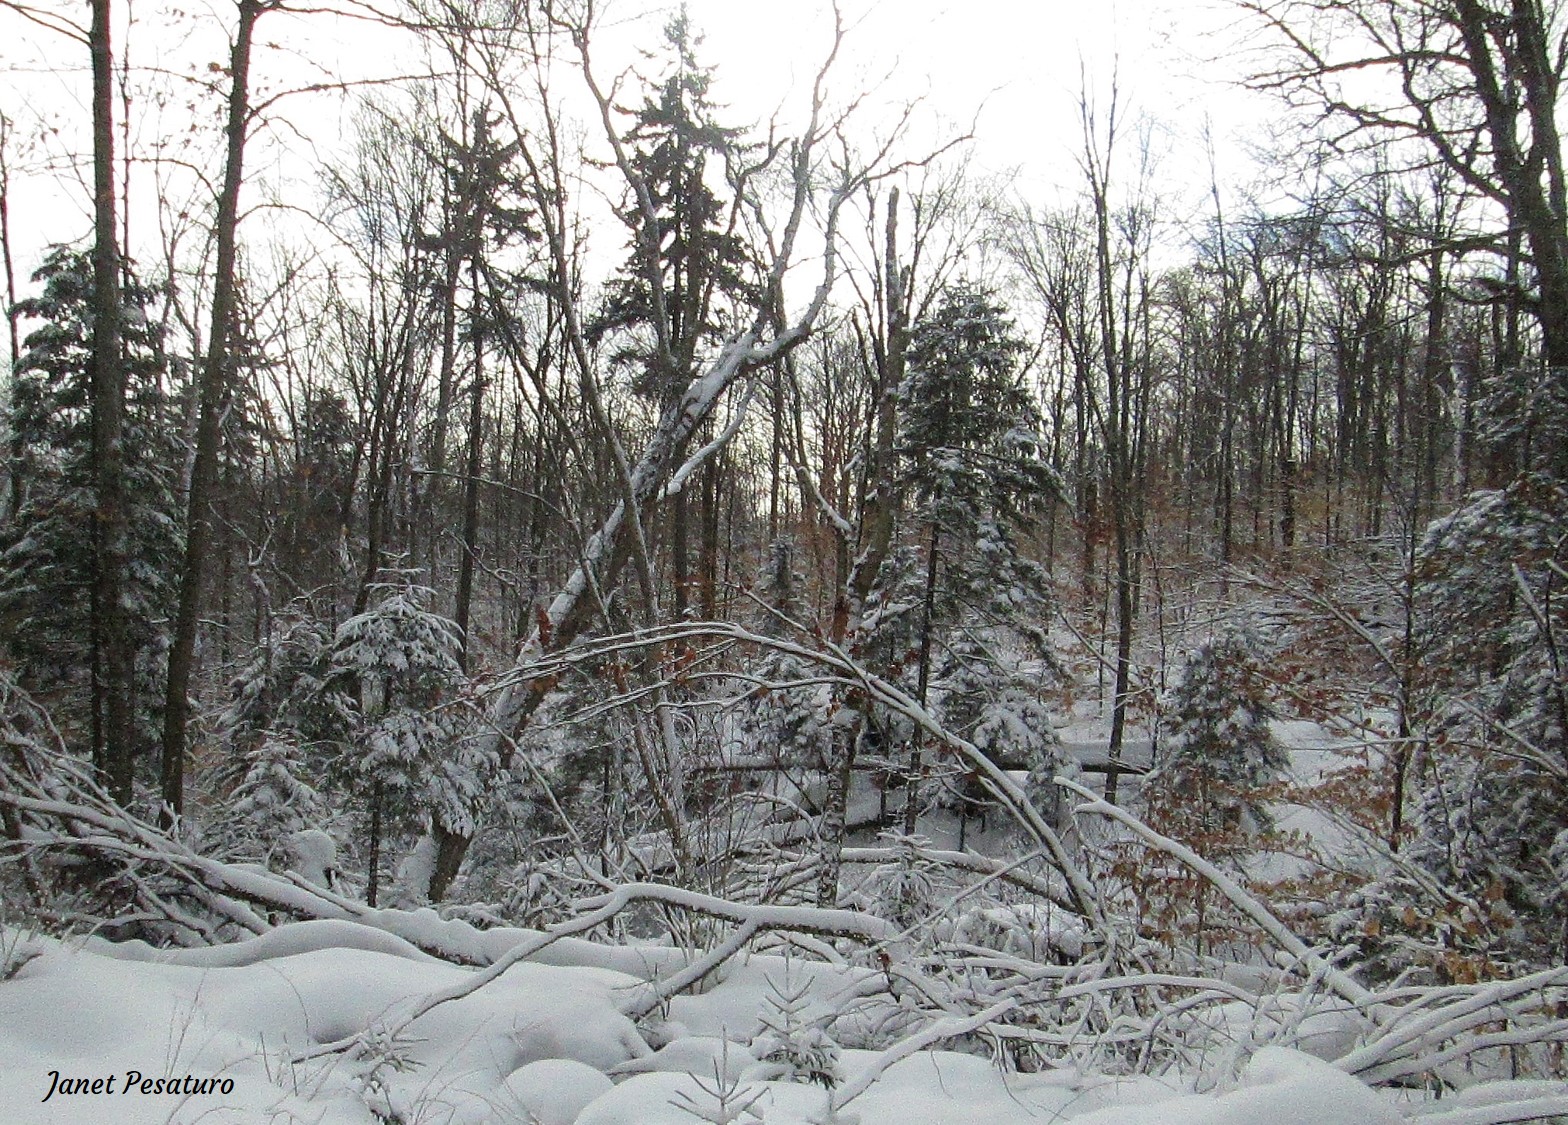 american marten habitat in winter